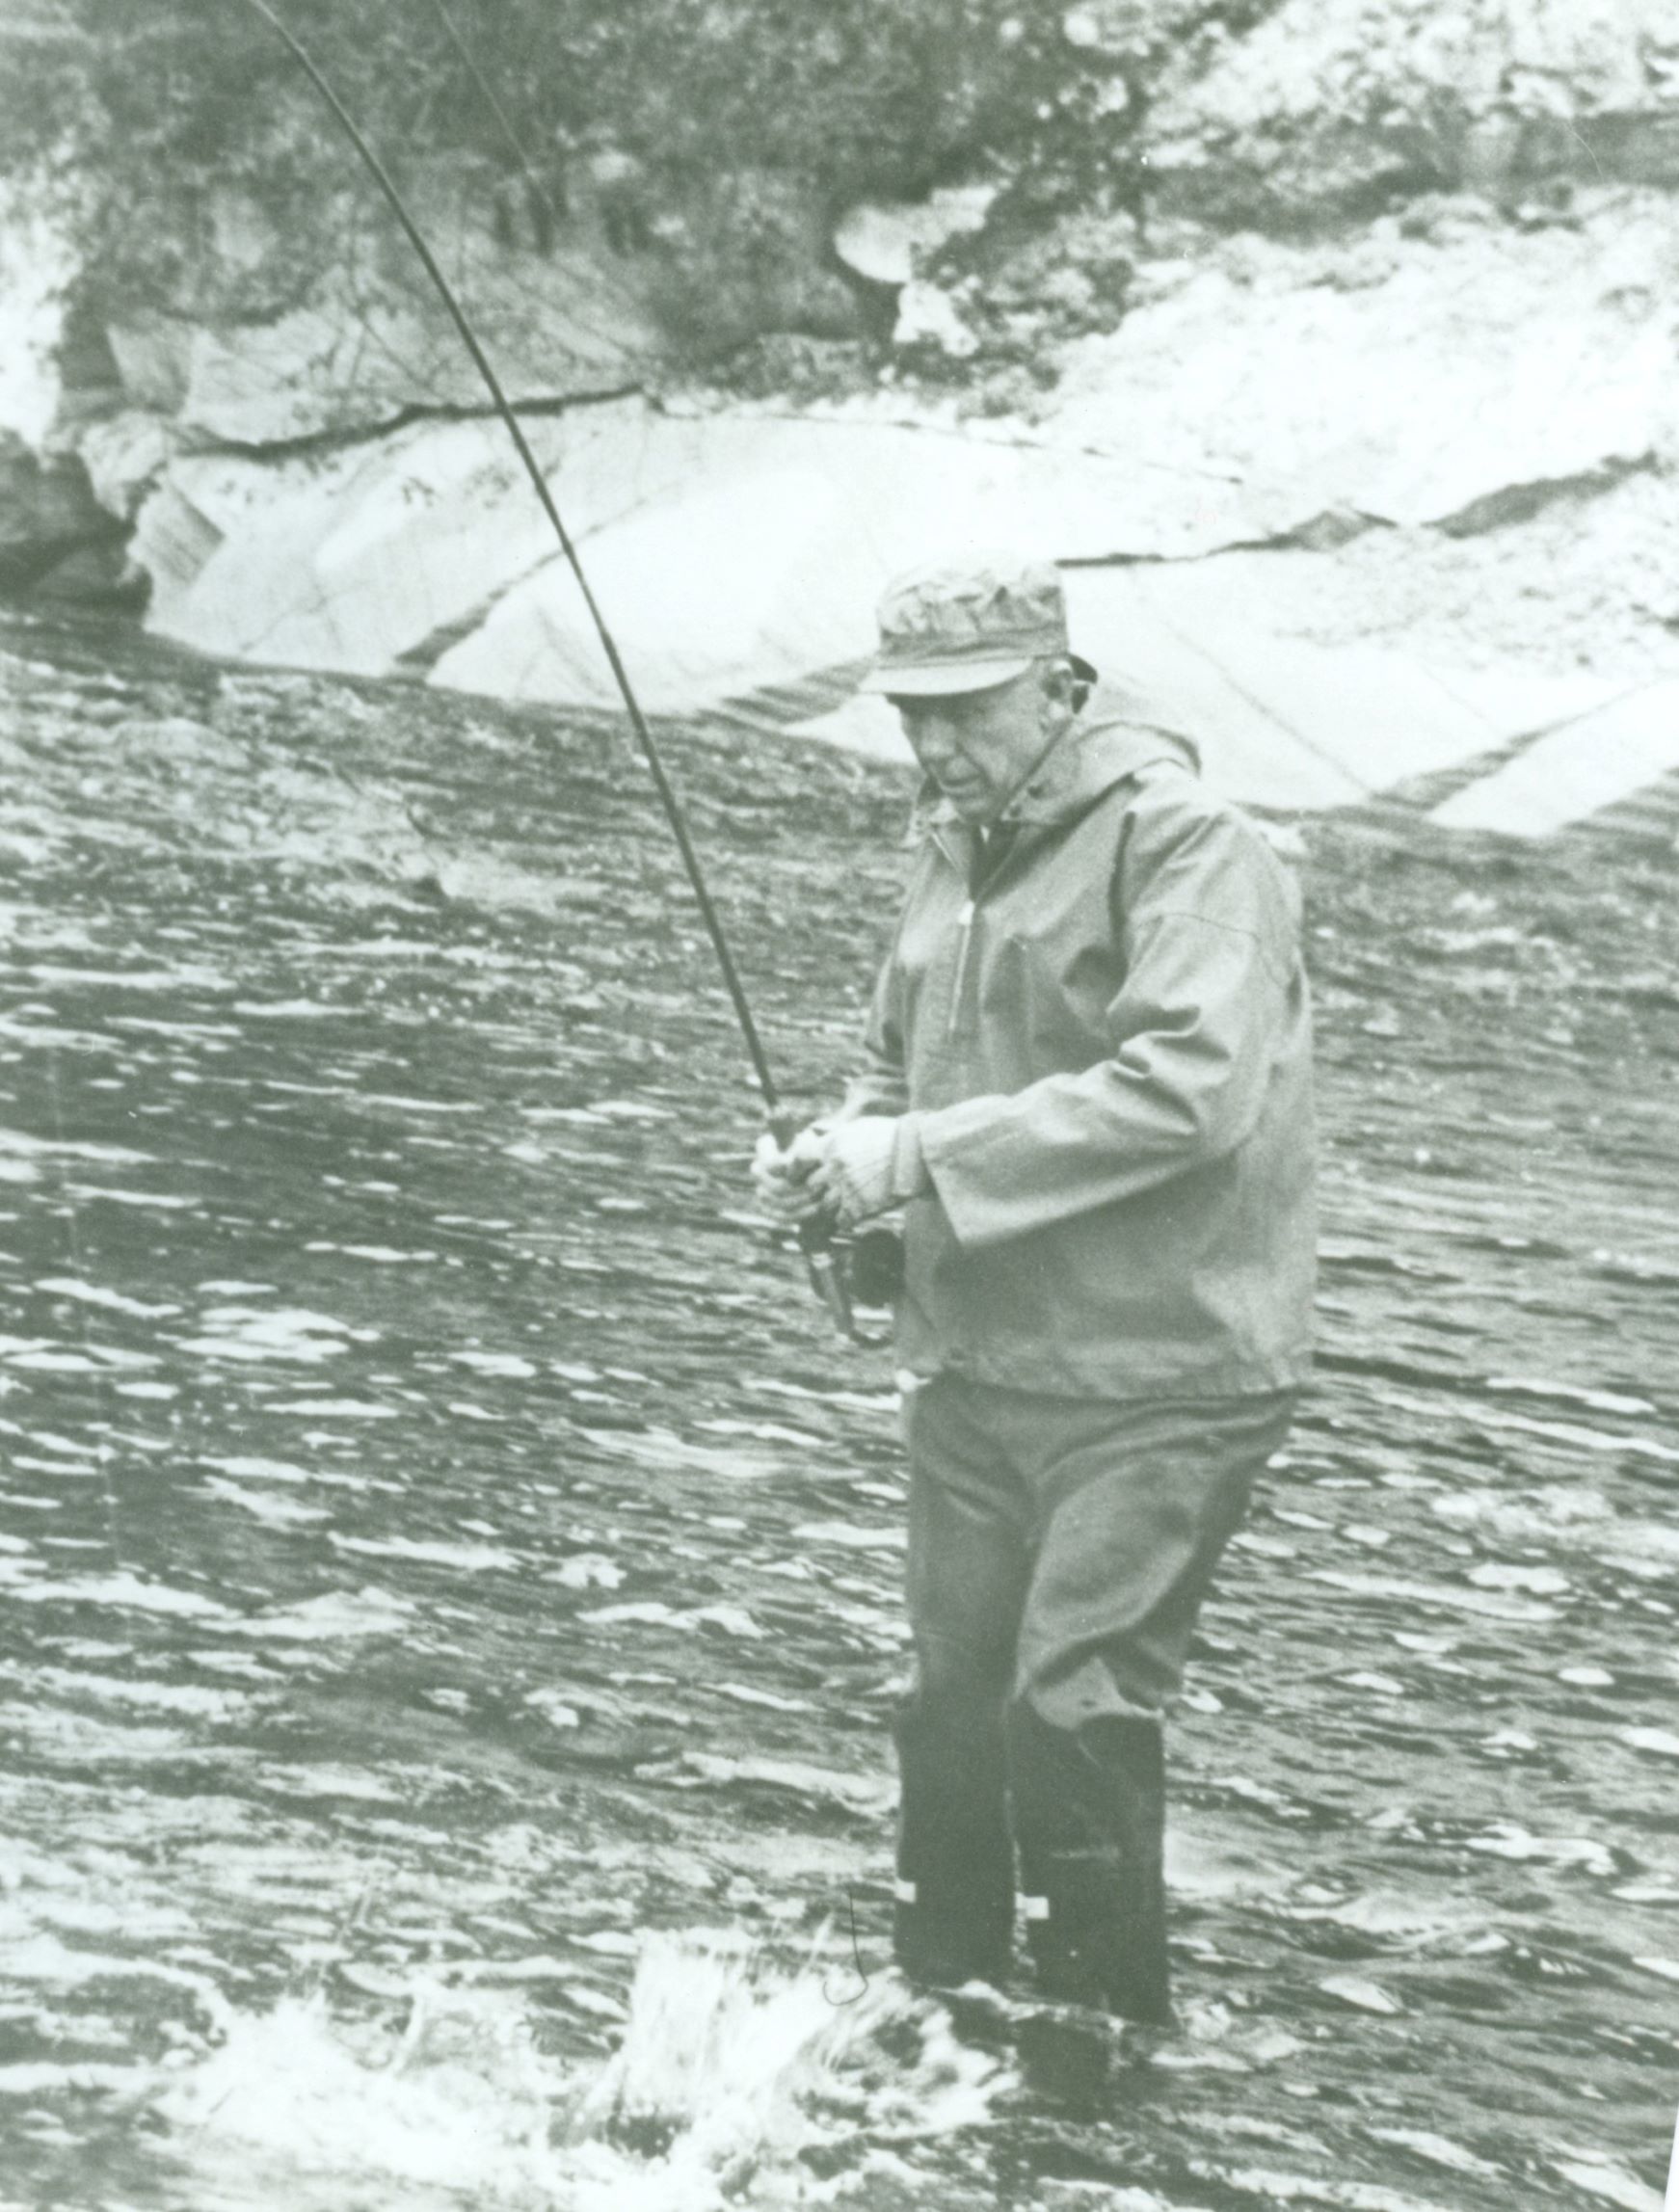 Marshall fishing in the rain in Newfoundland